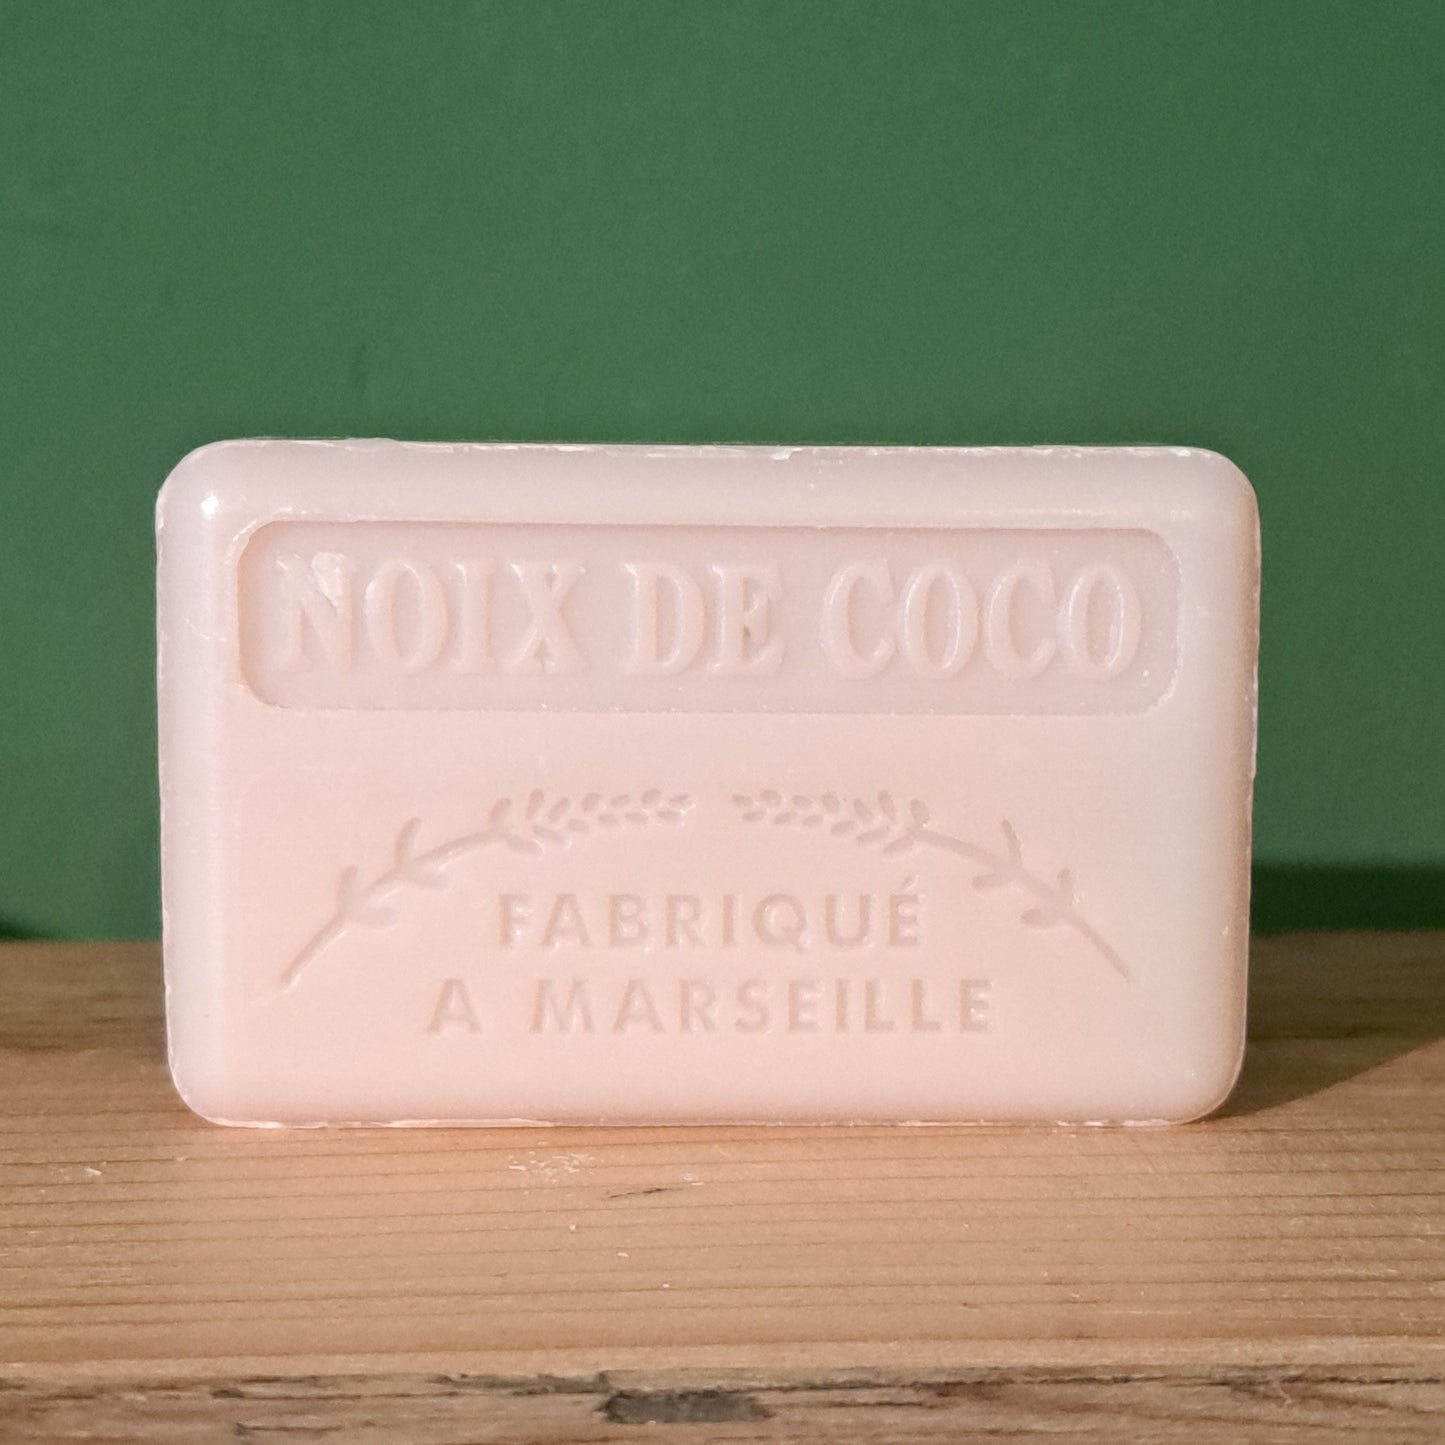 Savon de Marseille Soap